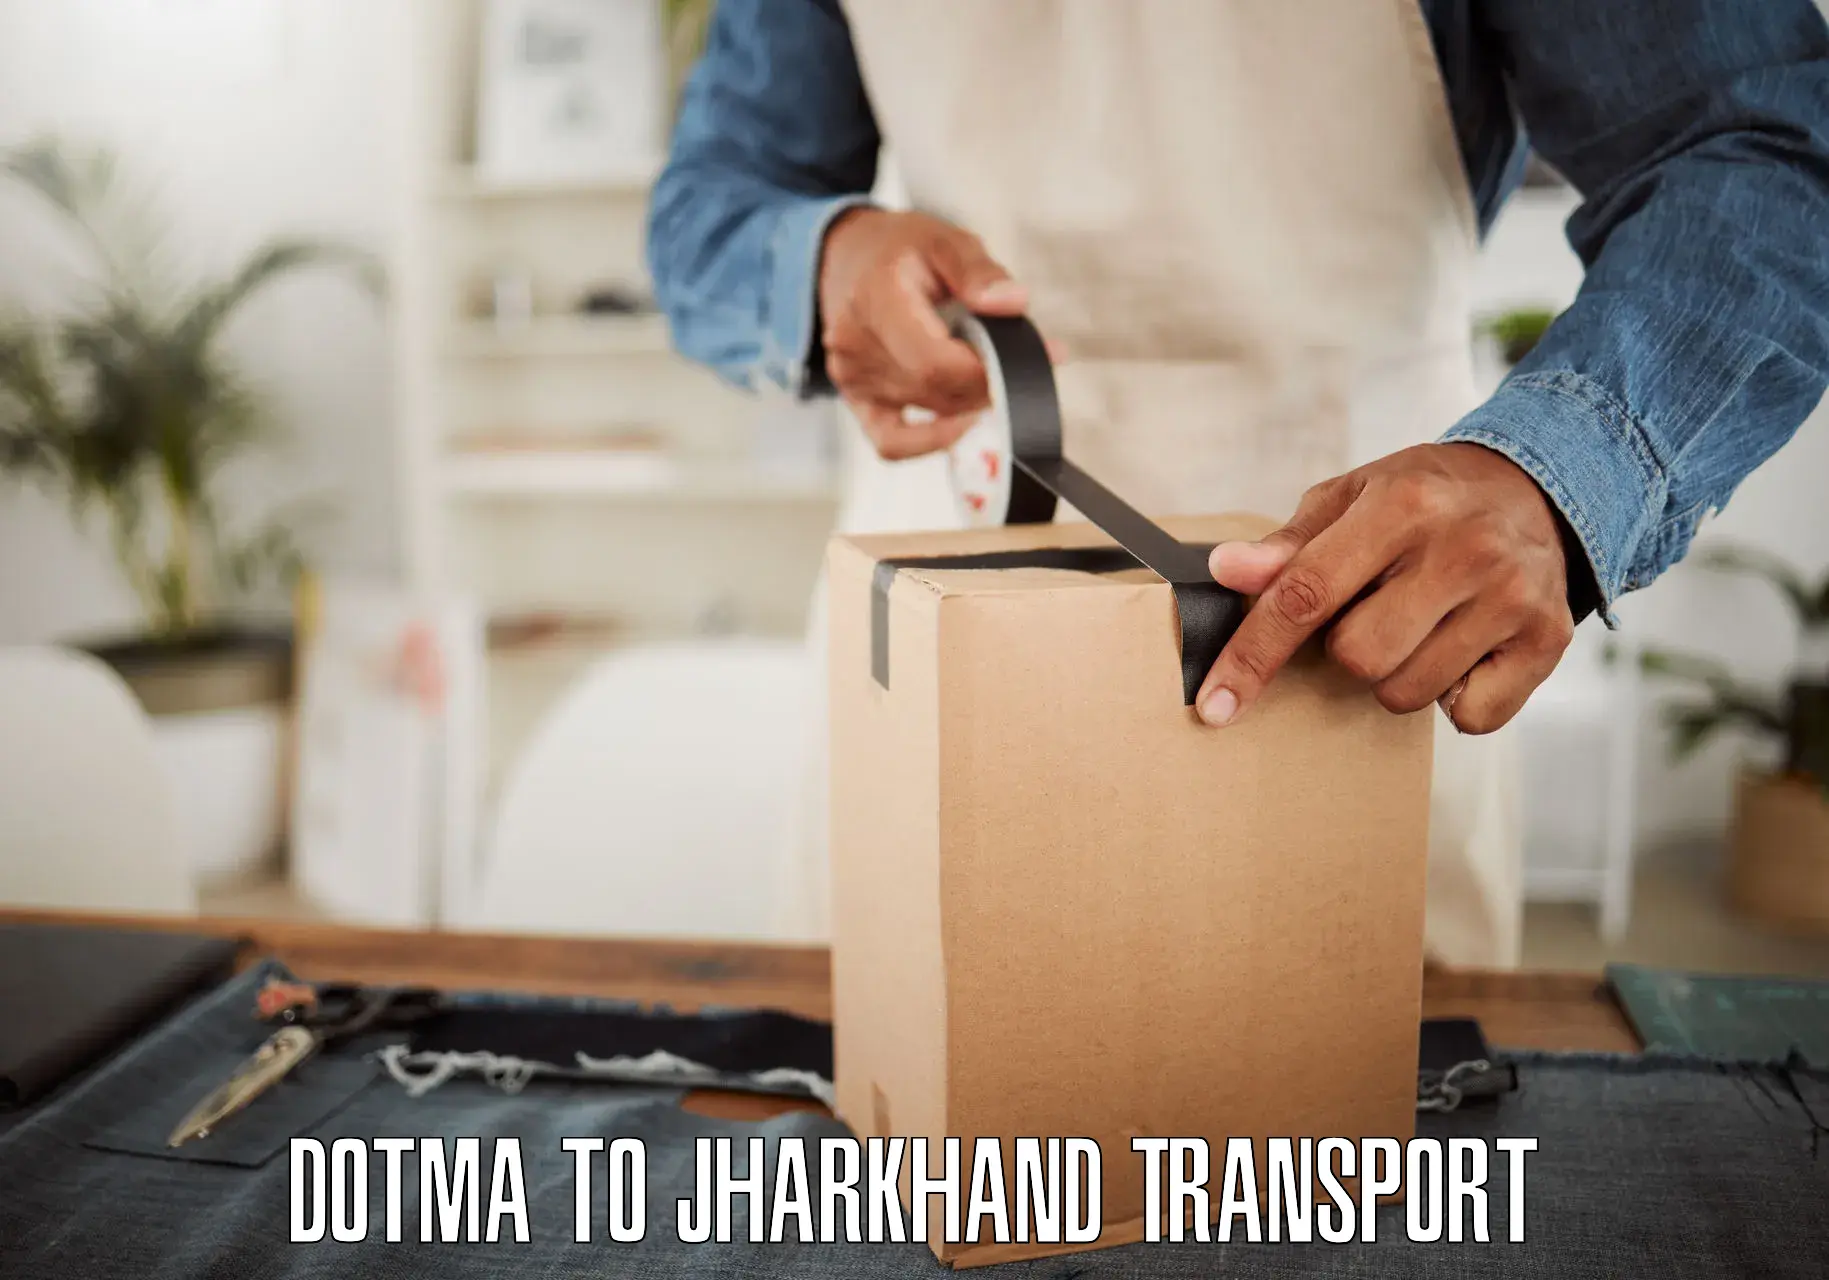 Transport in sharing Dotma to Govindpur